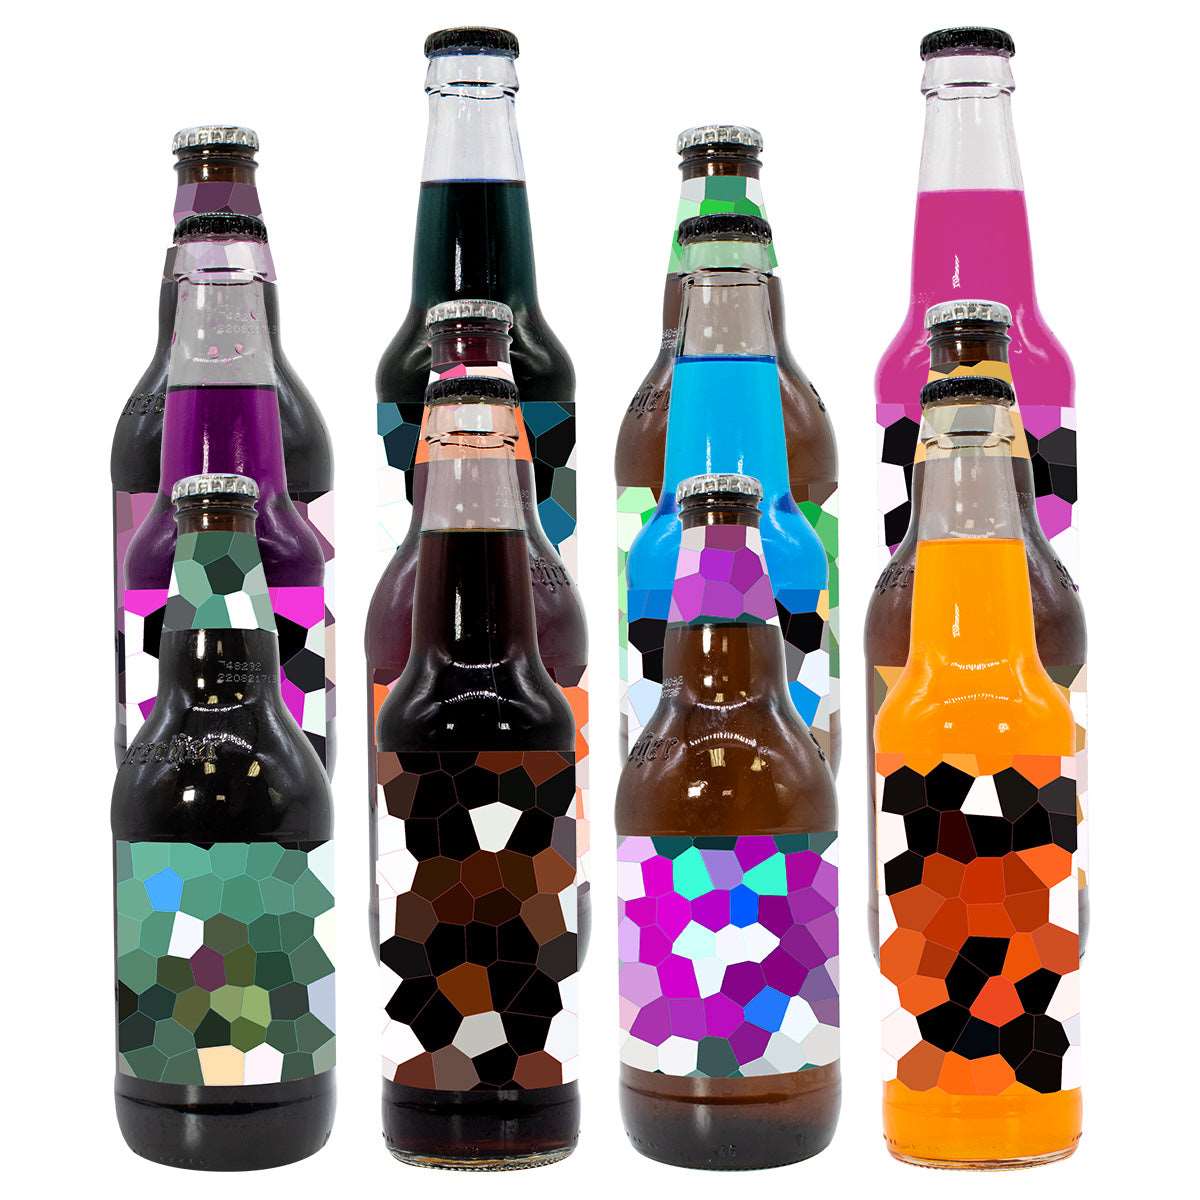 NEW SALE Christmas Party 4-pack Bottle Beer Insulators let's Get